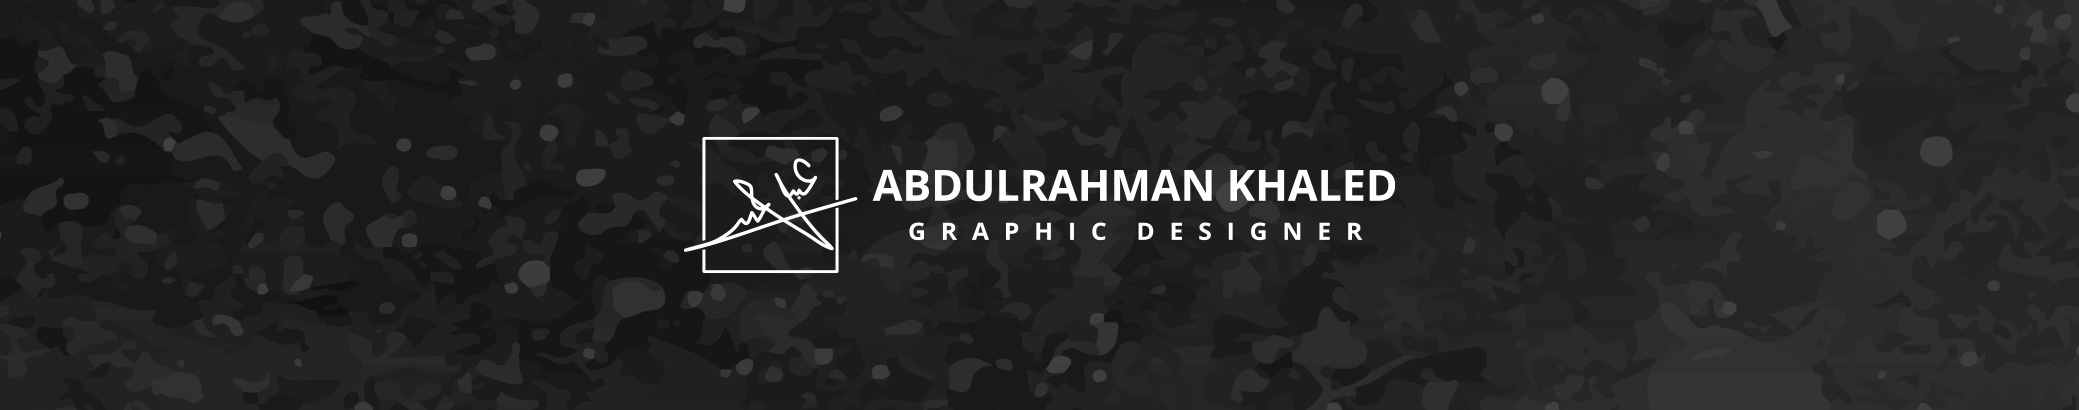 Abdulrahman Khaled's profile banner